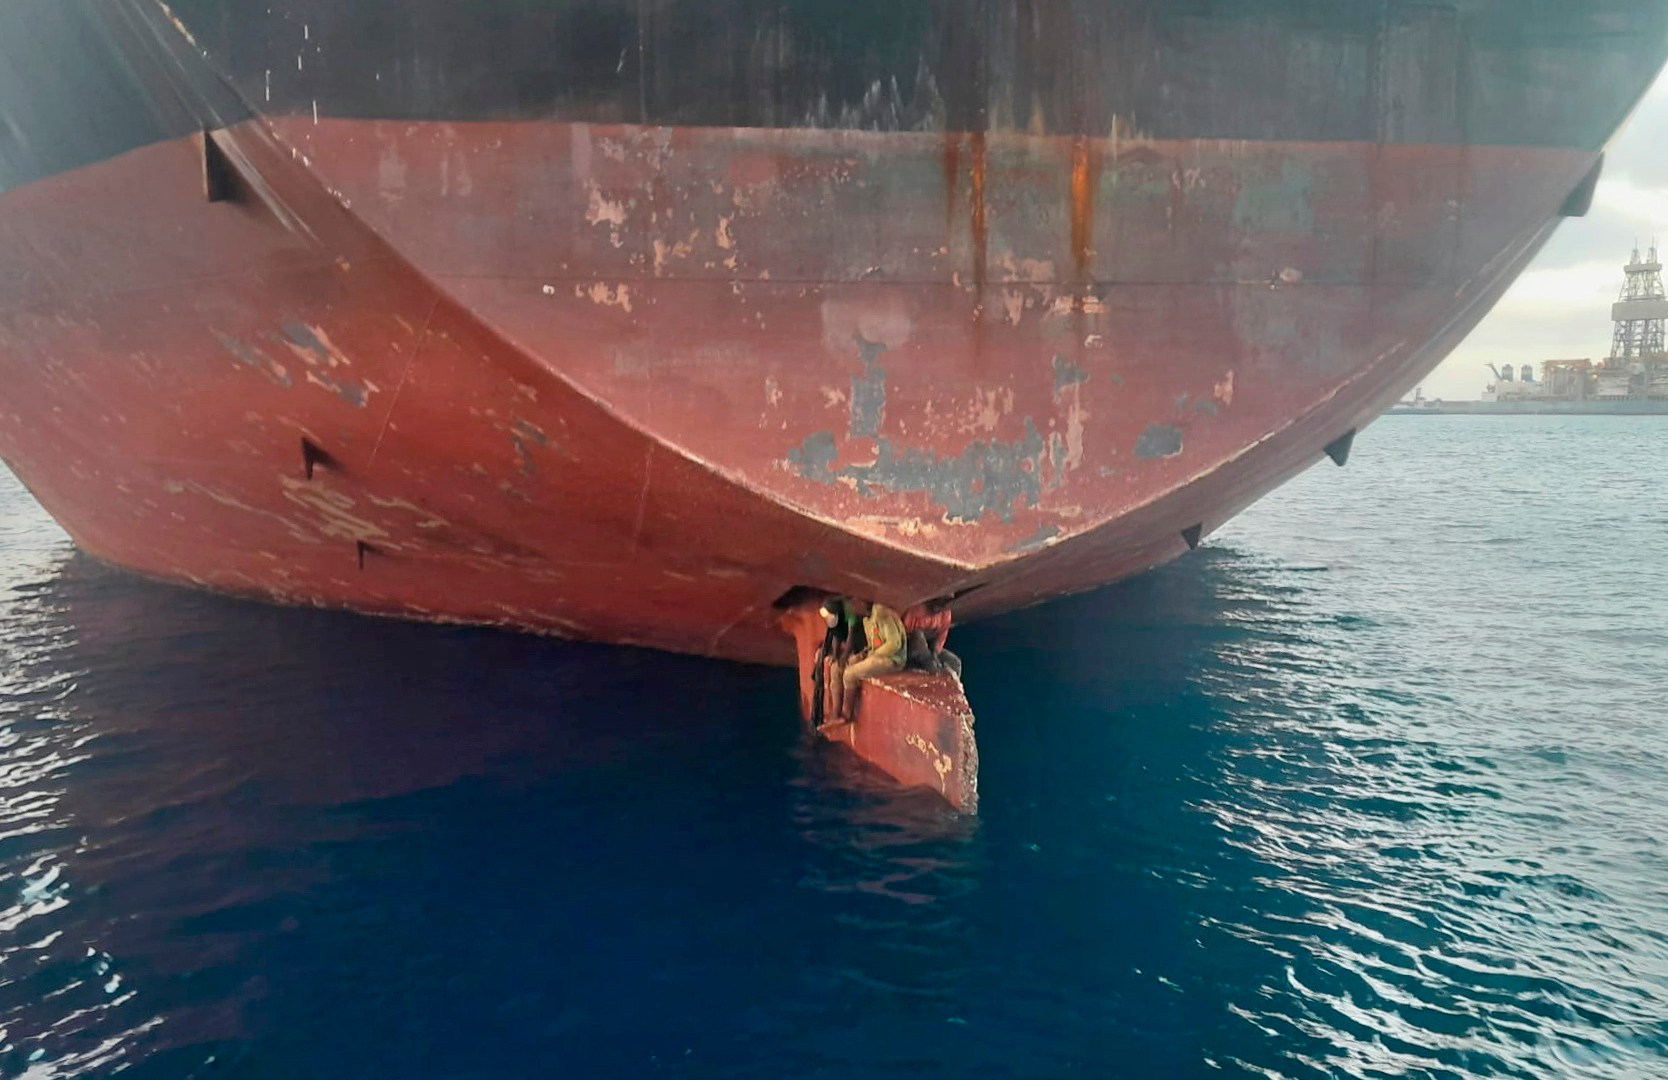 Stowaways journey from Nigeria to Canary Islands on ship’s rudder